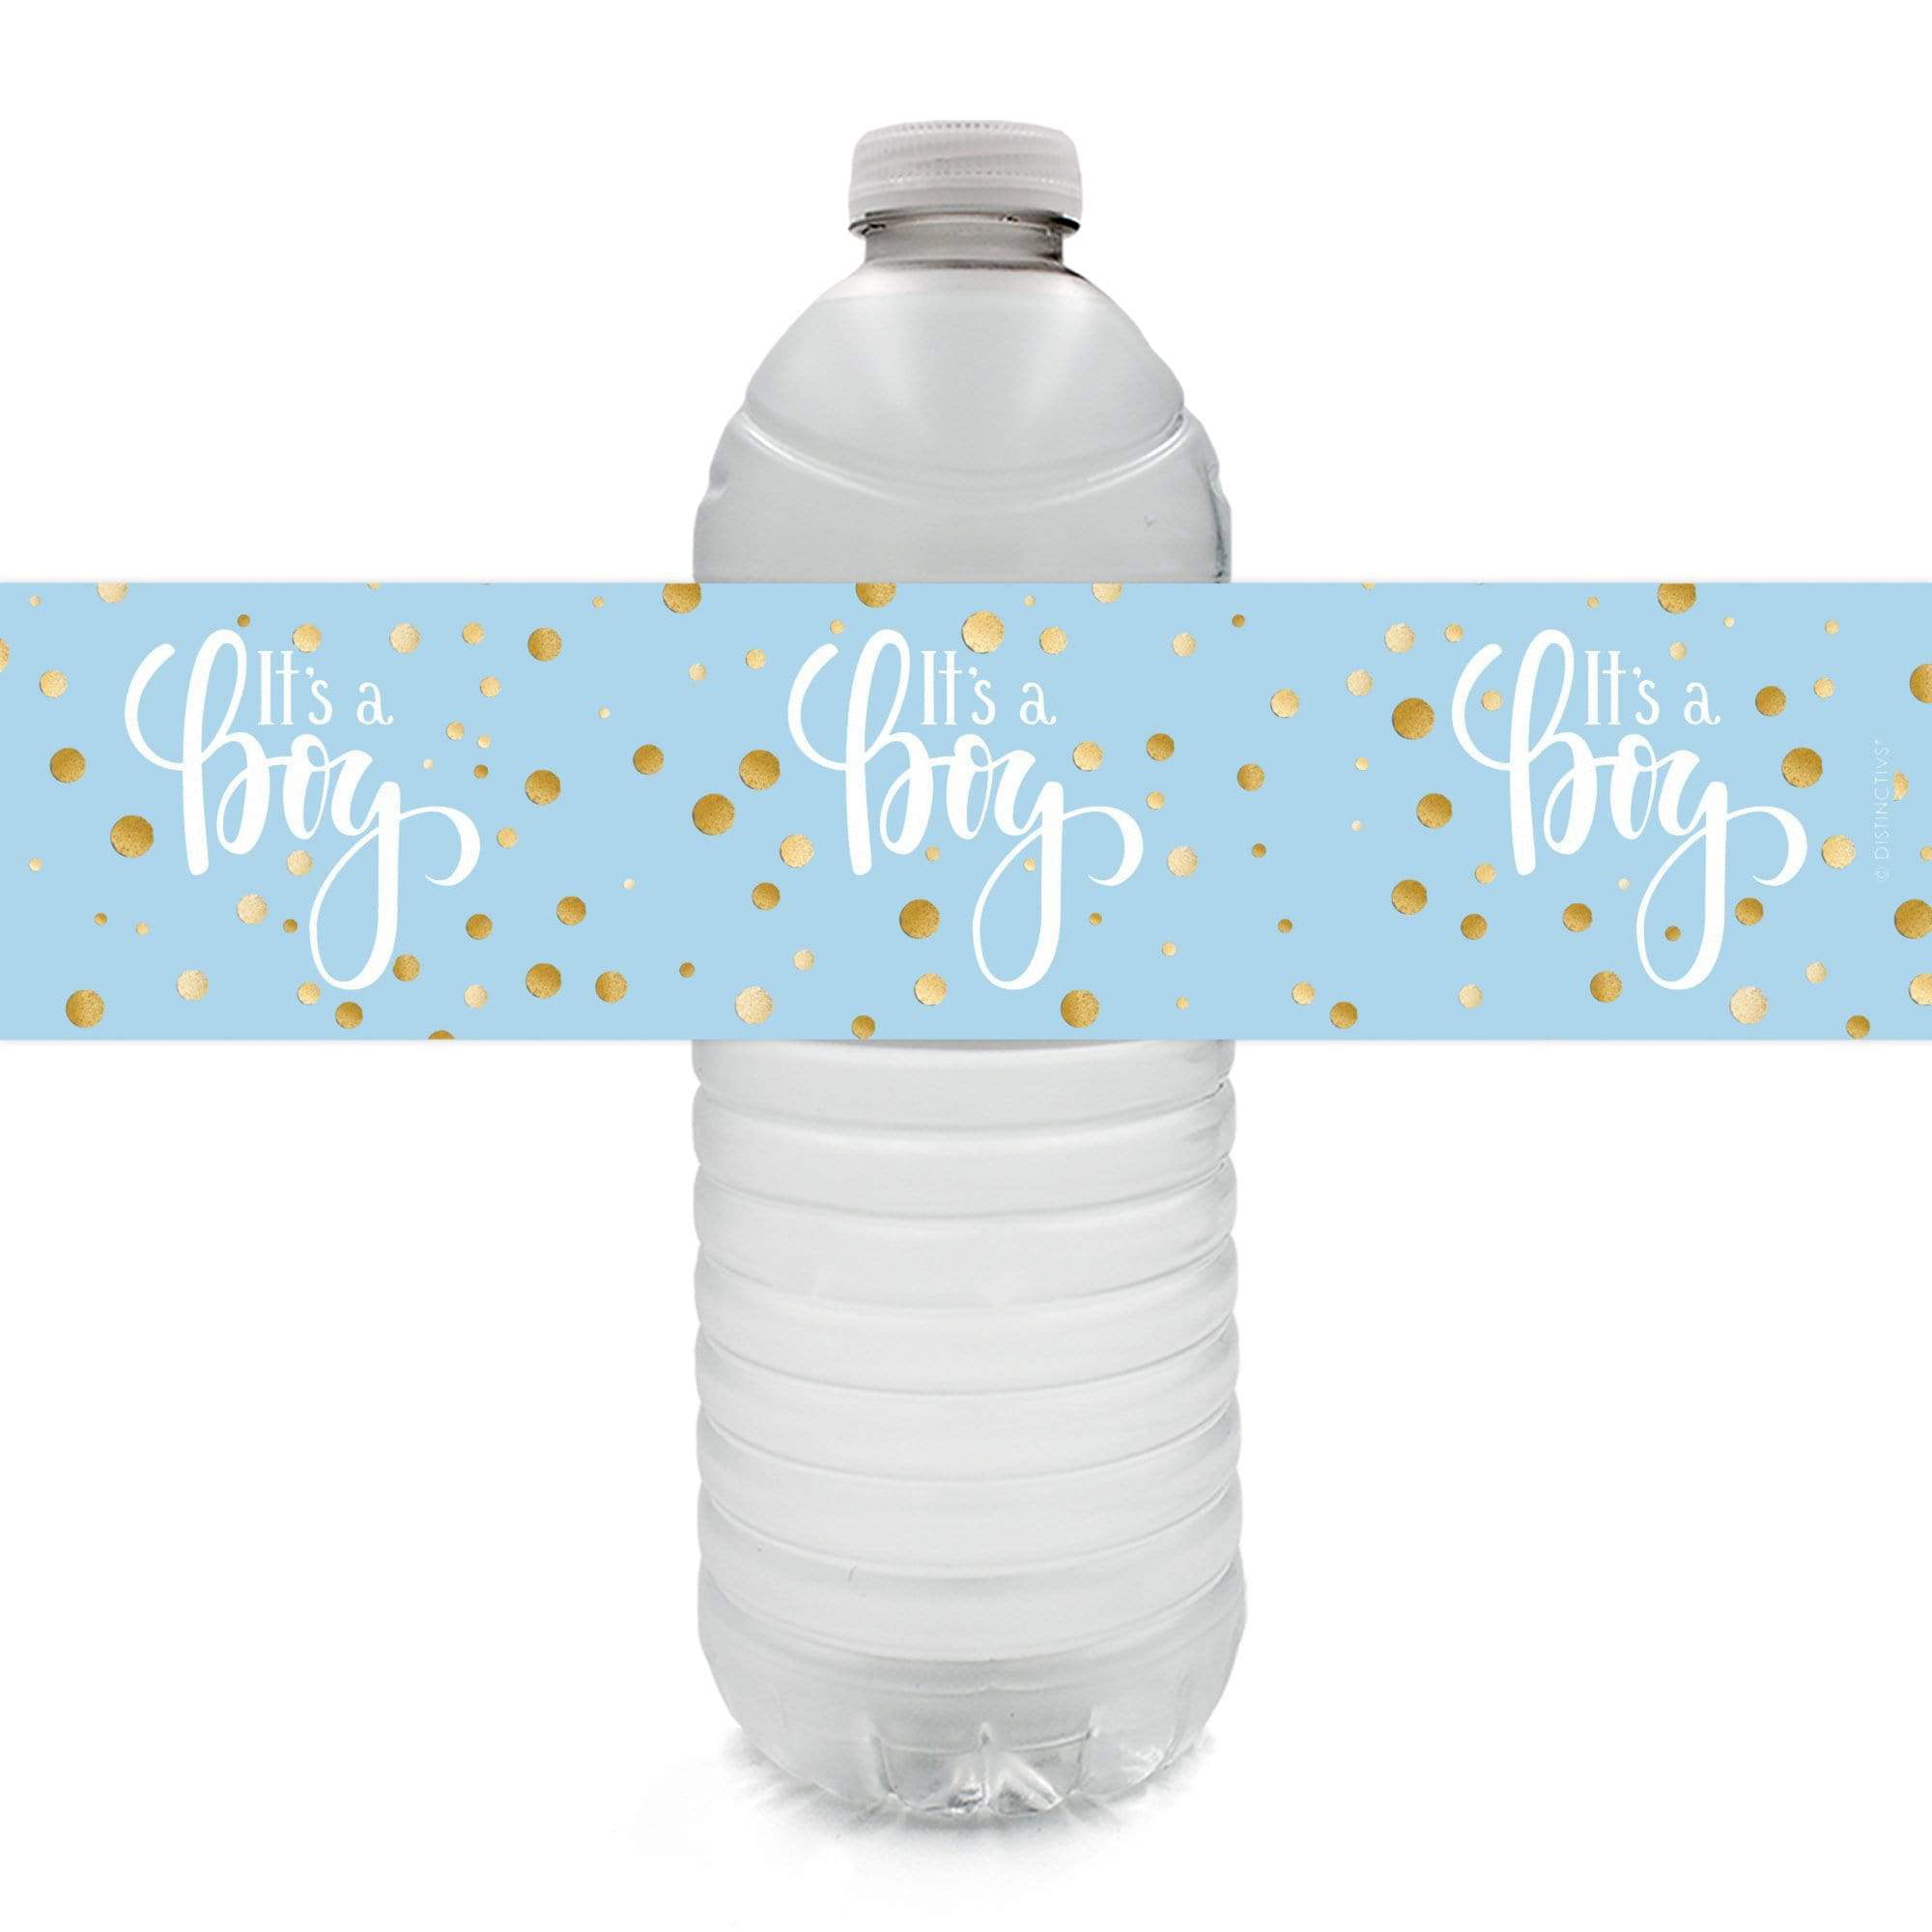 10 Twin Boys Baby Shower Water Bottle labels Buy 3 get 1 free bg14 